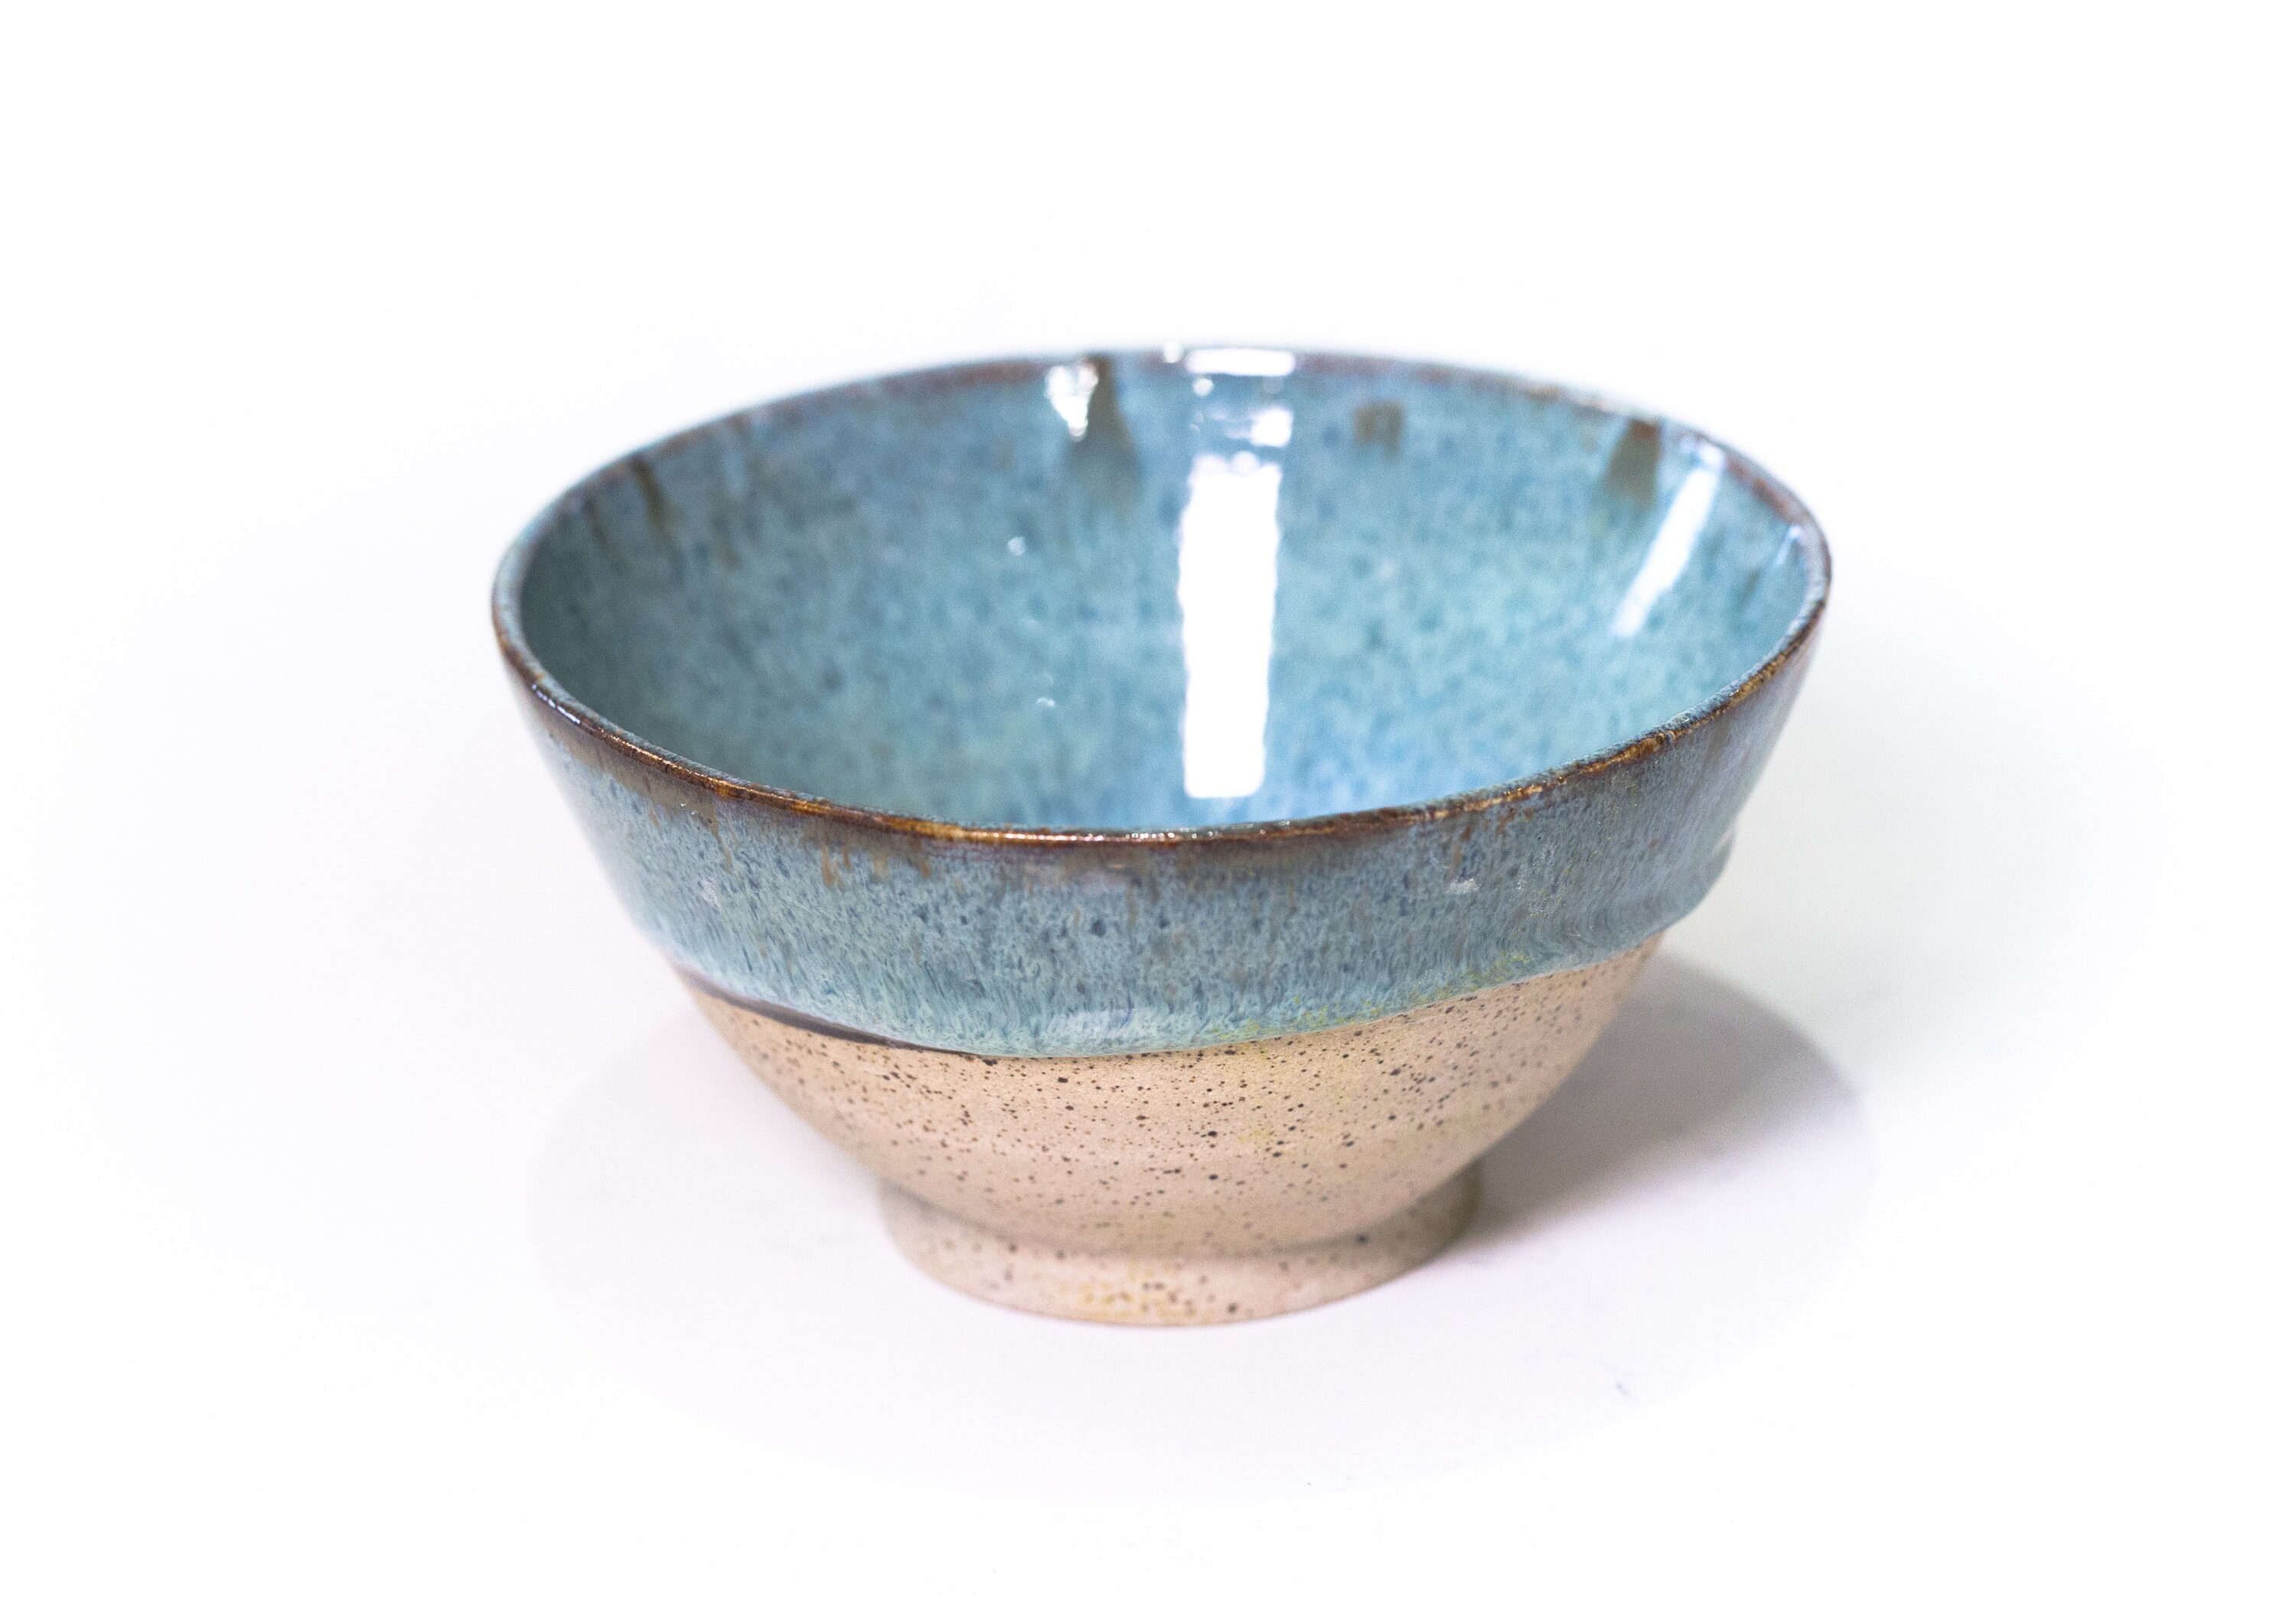 Small Ceramic Bowls with Grey and Blue Glaze (Pair) - Medewi Bay